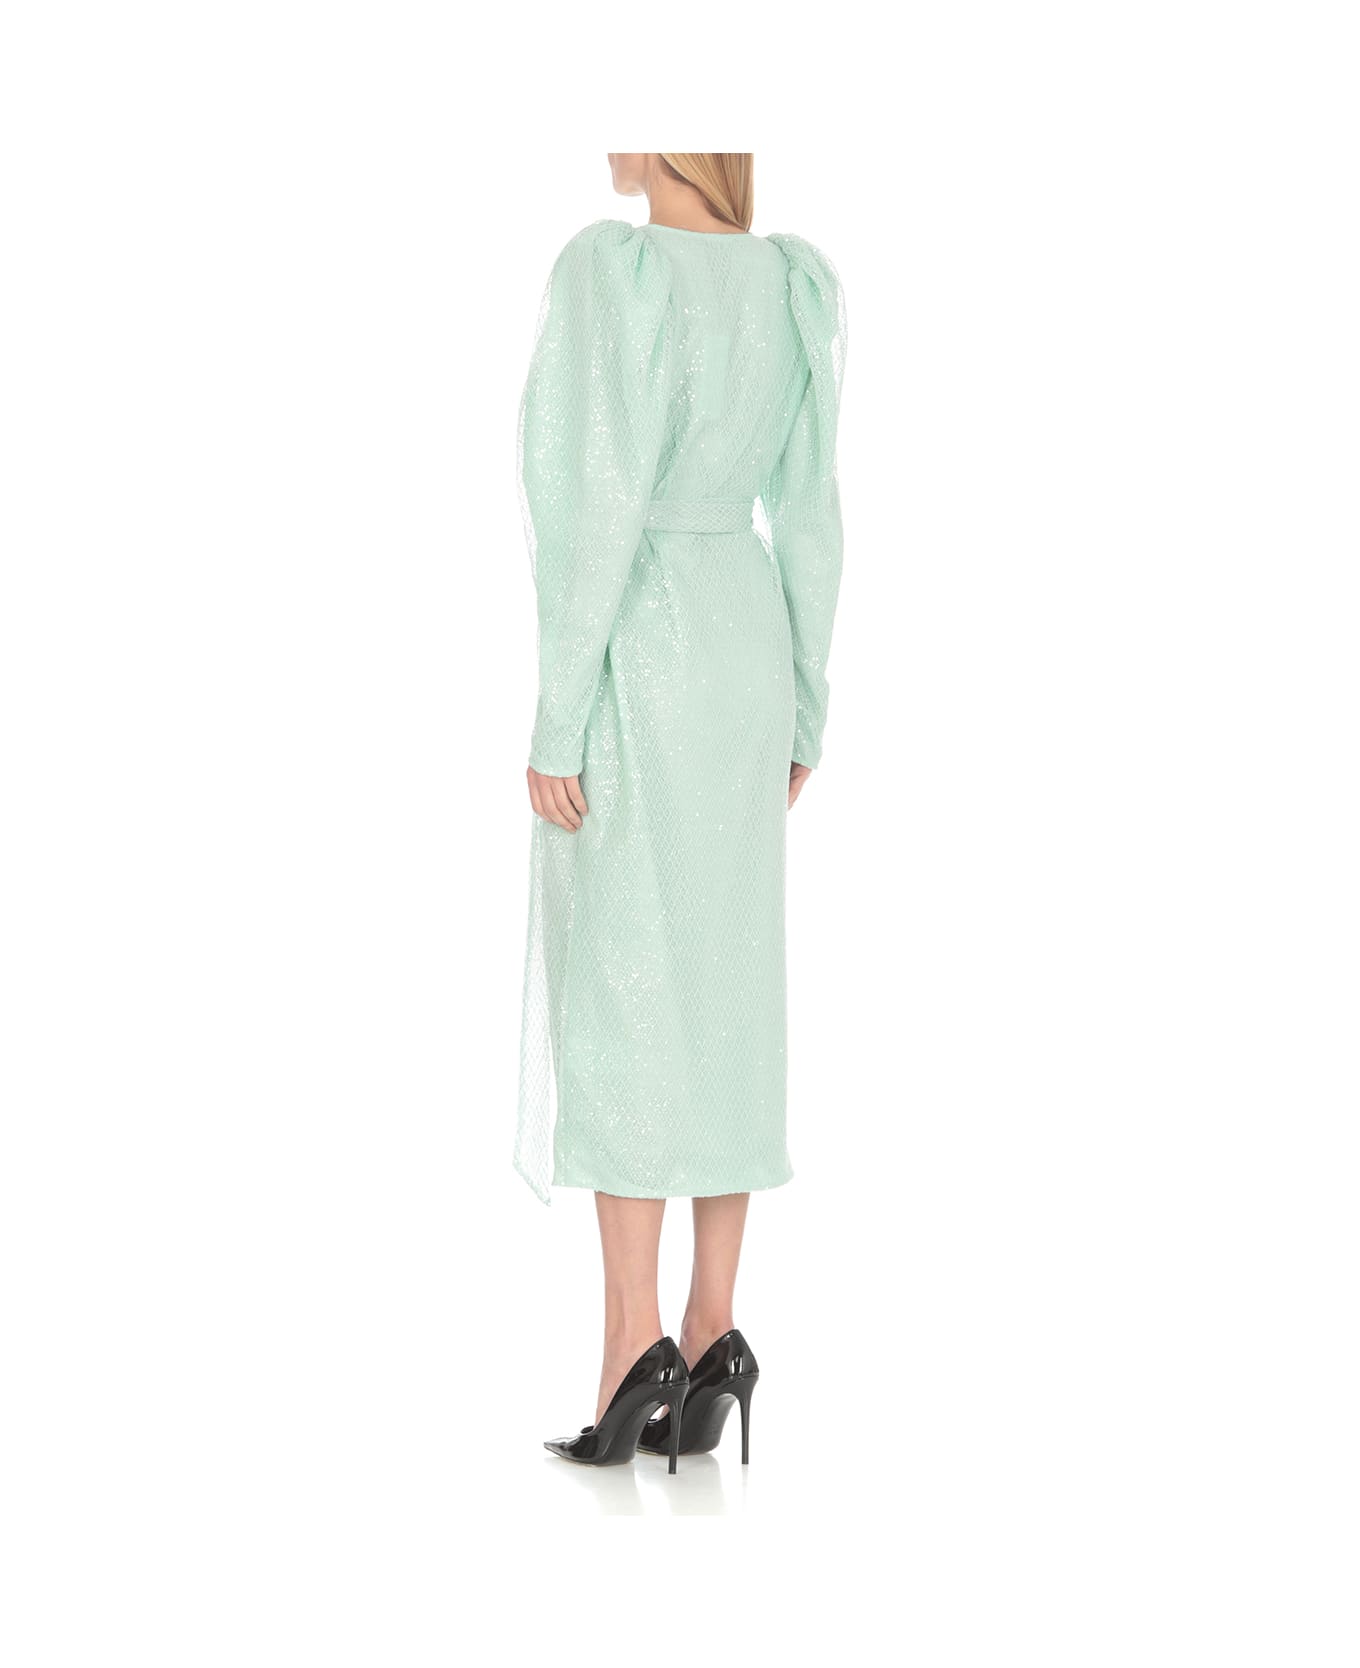 Rotate by Birger Christensen Dress With Paillettess - Green